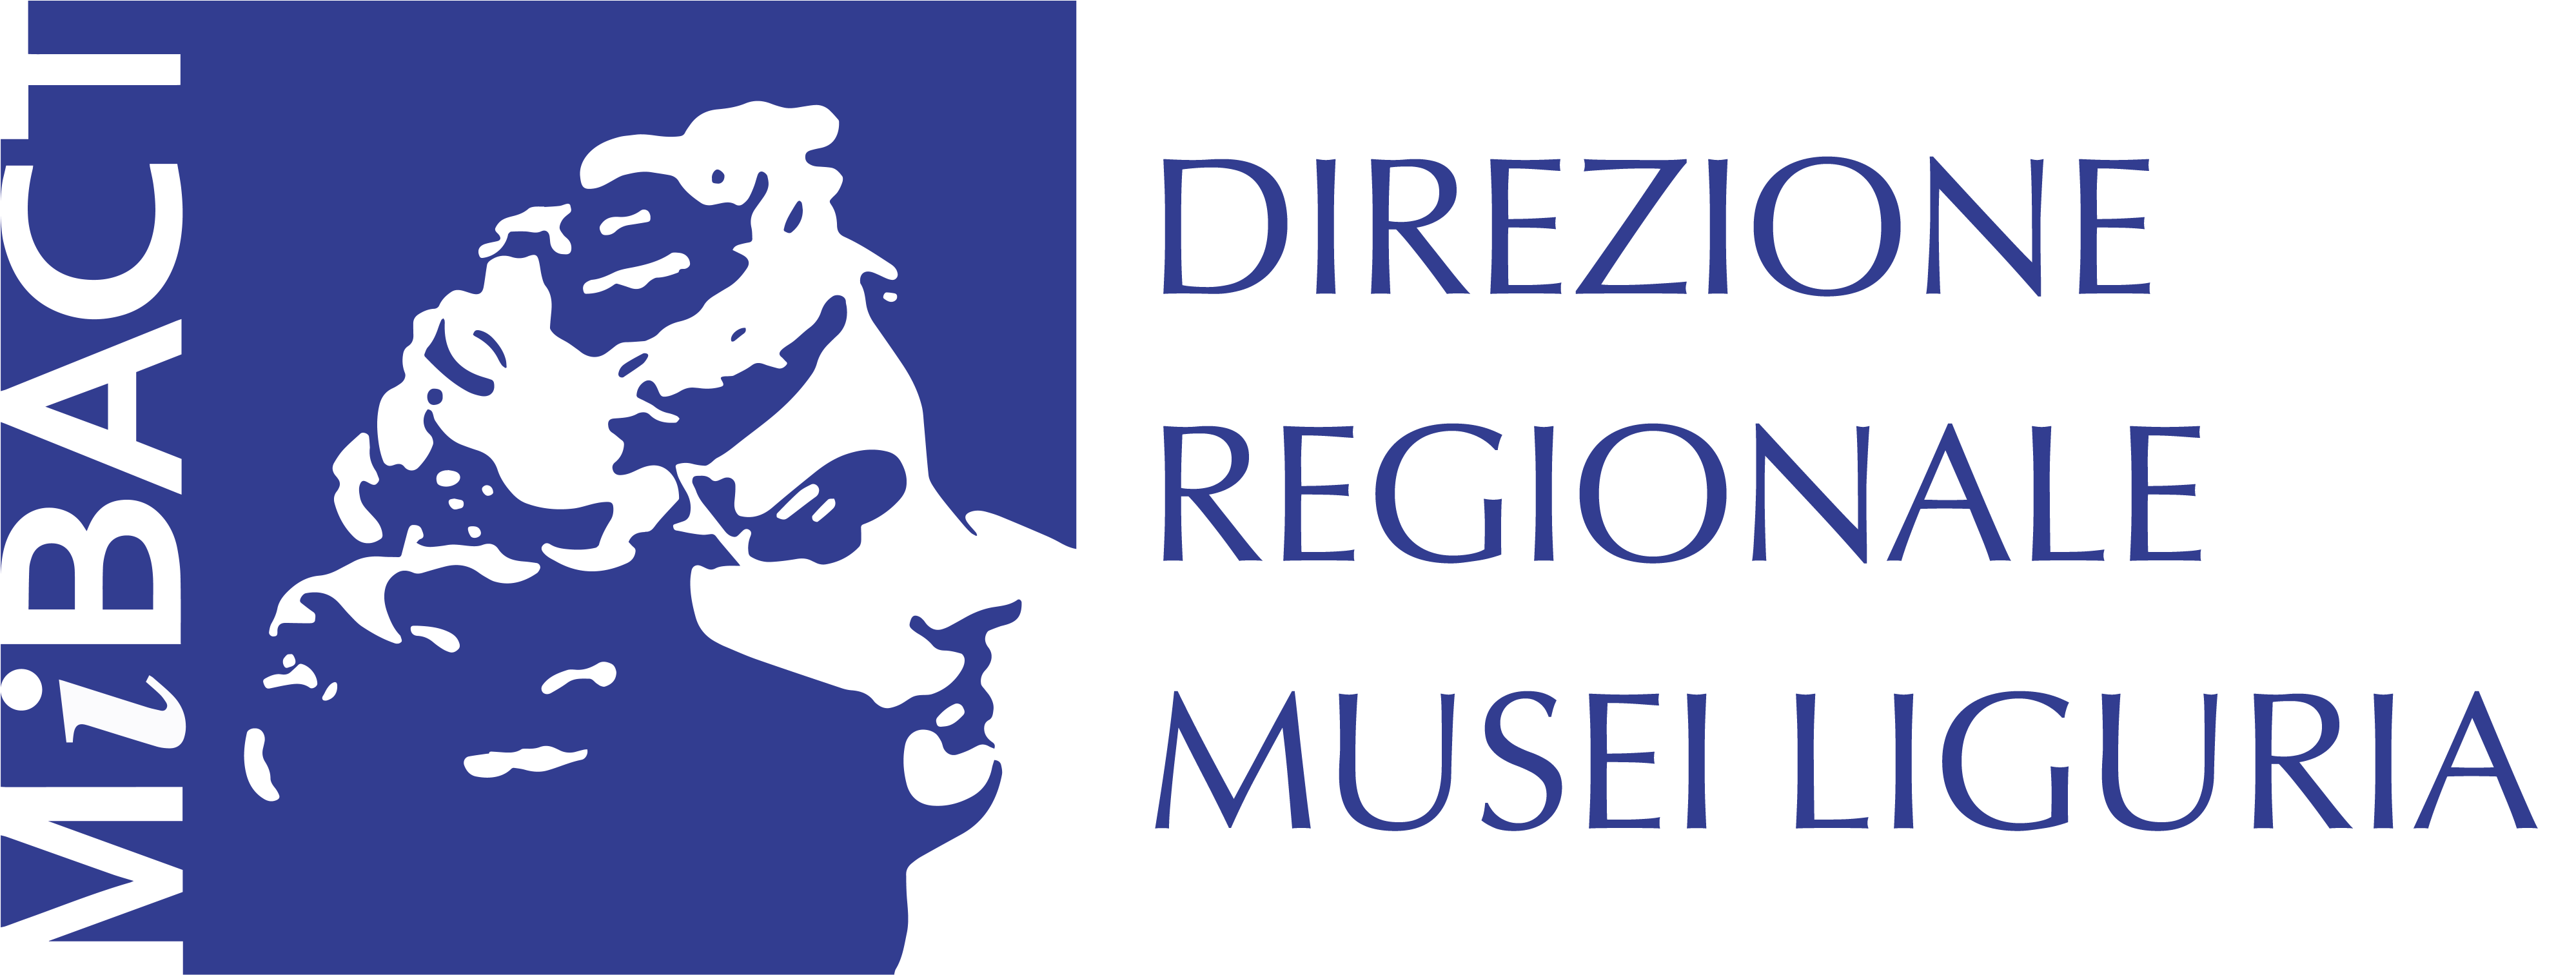 Direzione Regionale Musei Liguria